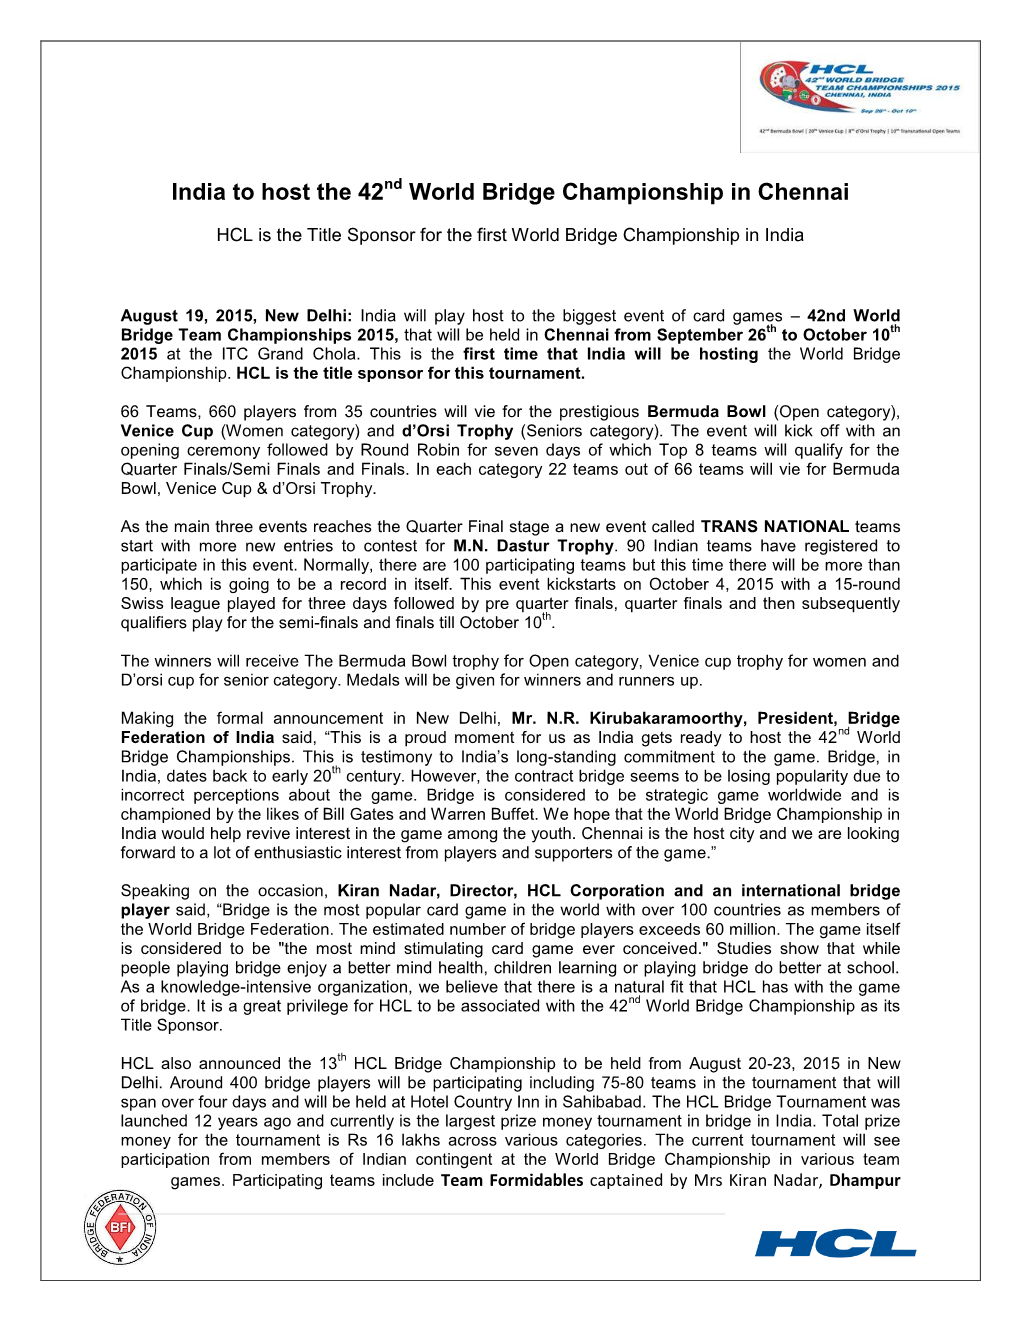 India to Host the 42 World Bridge Championship in Chennai